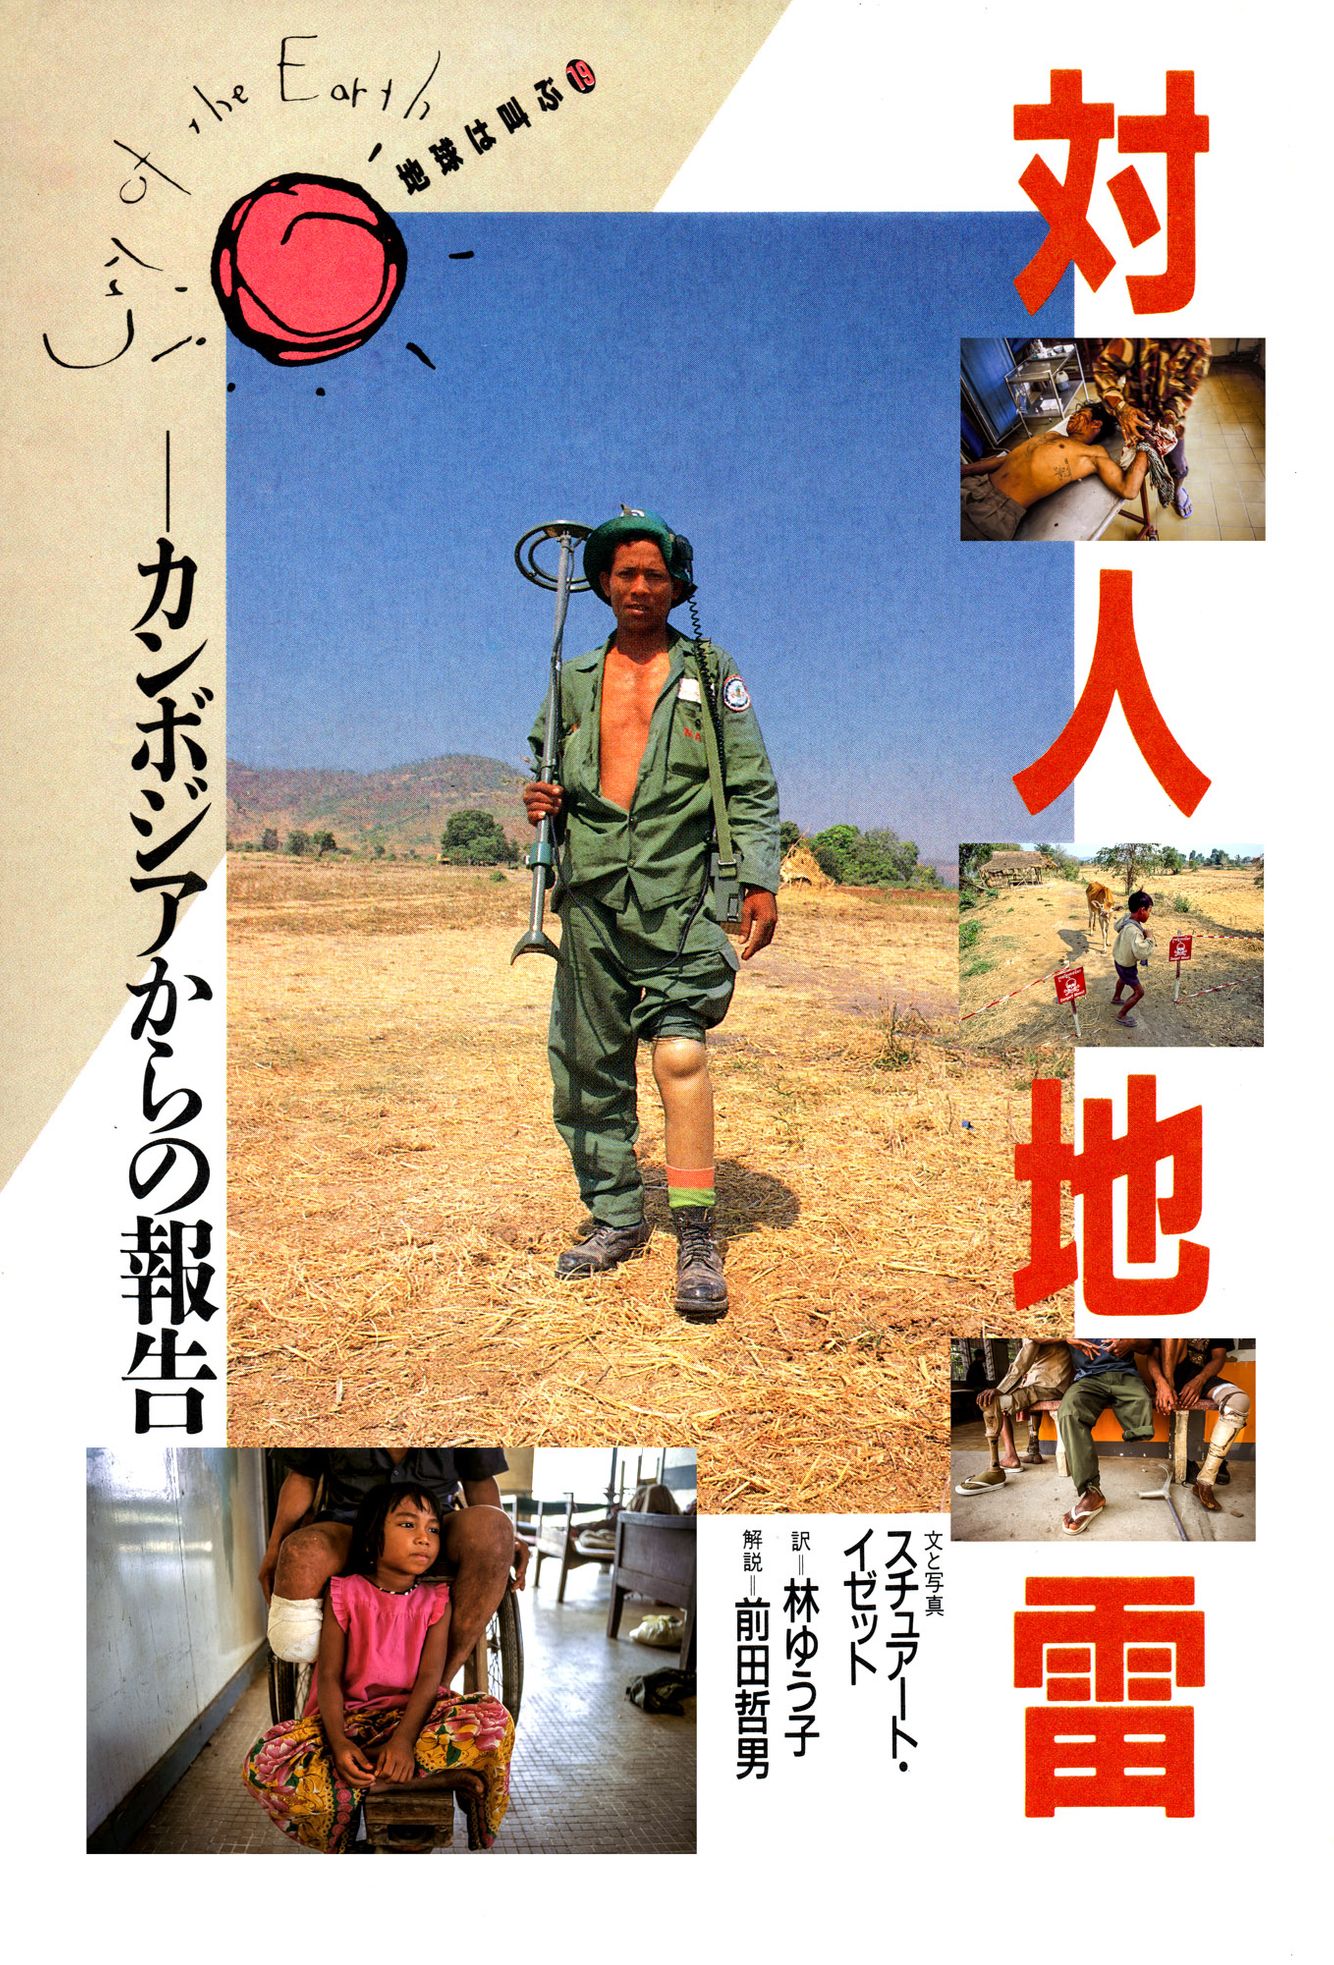 Landmines in Cambodia - Sekai Magazine, Japan